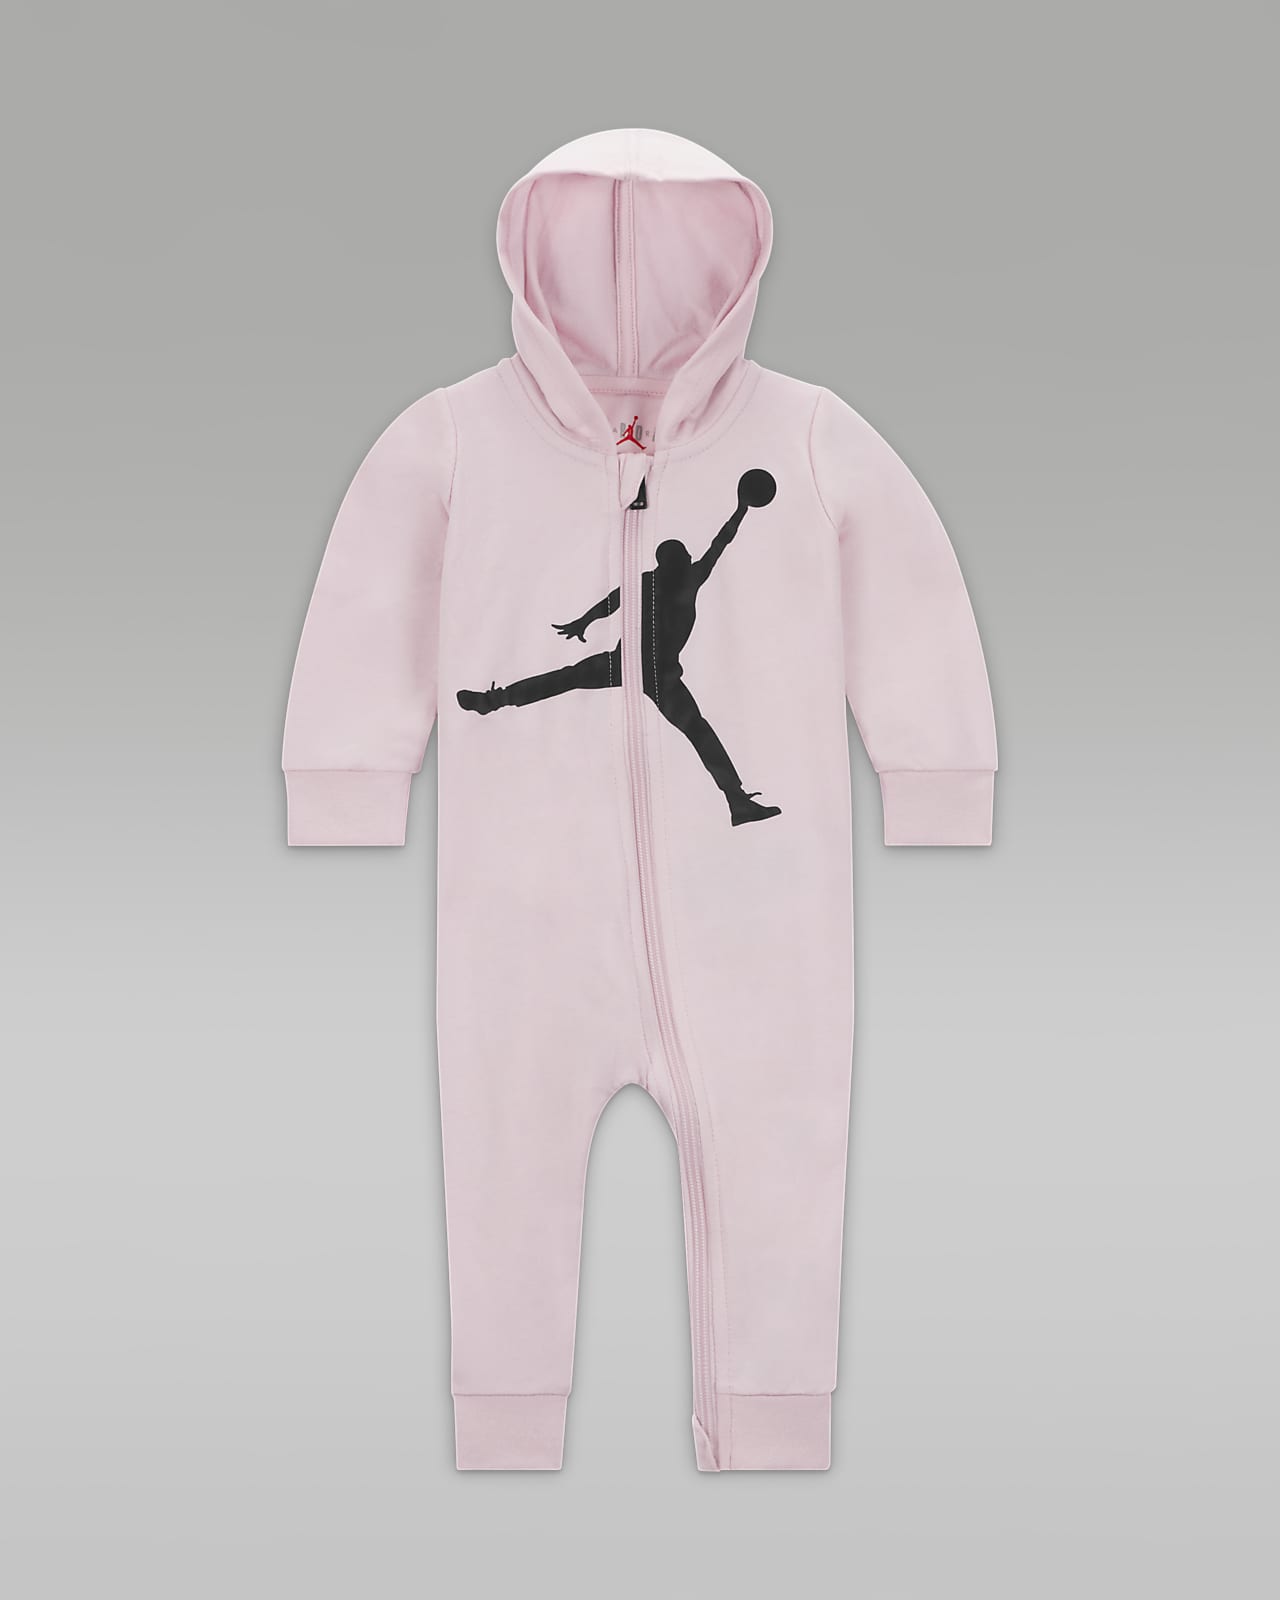 Jordan Baby (3–6M) Jumpman Hooded Overalls